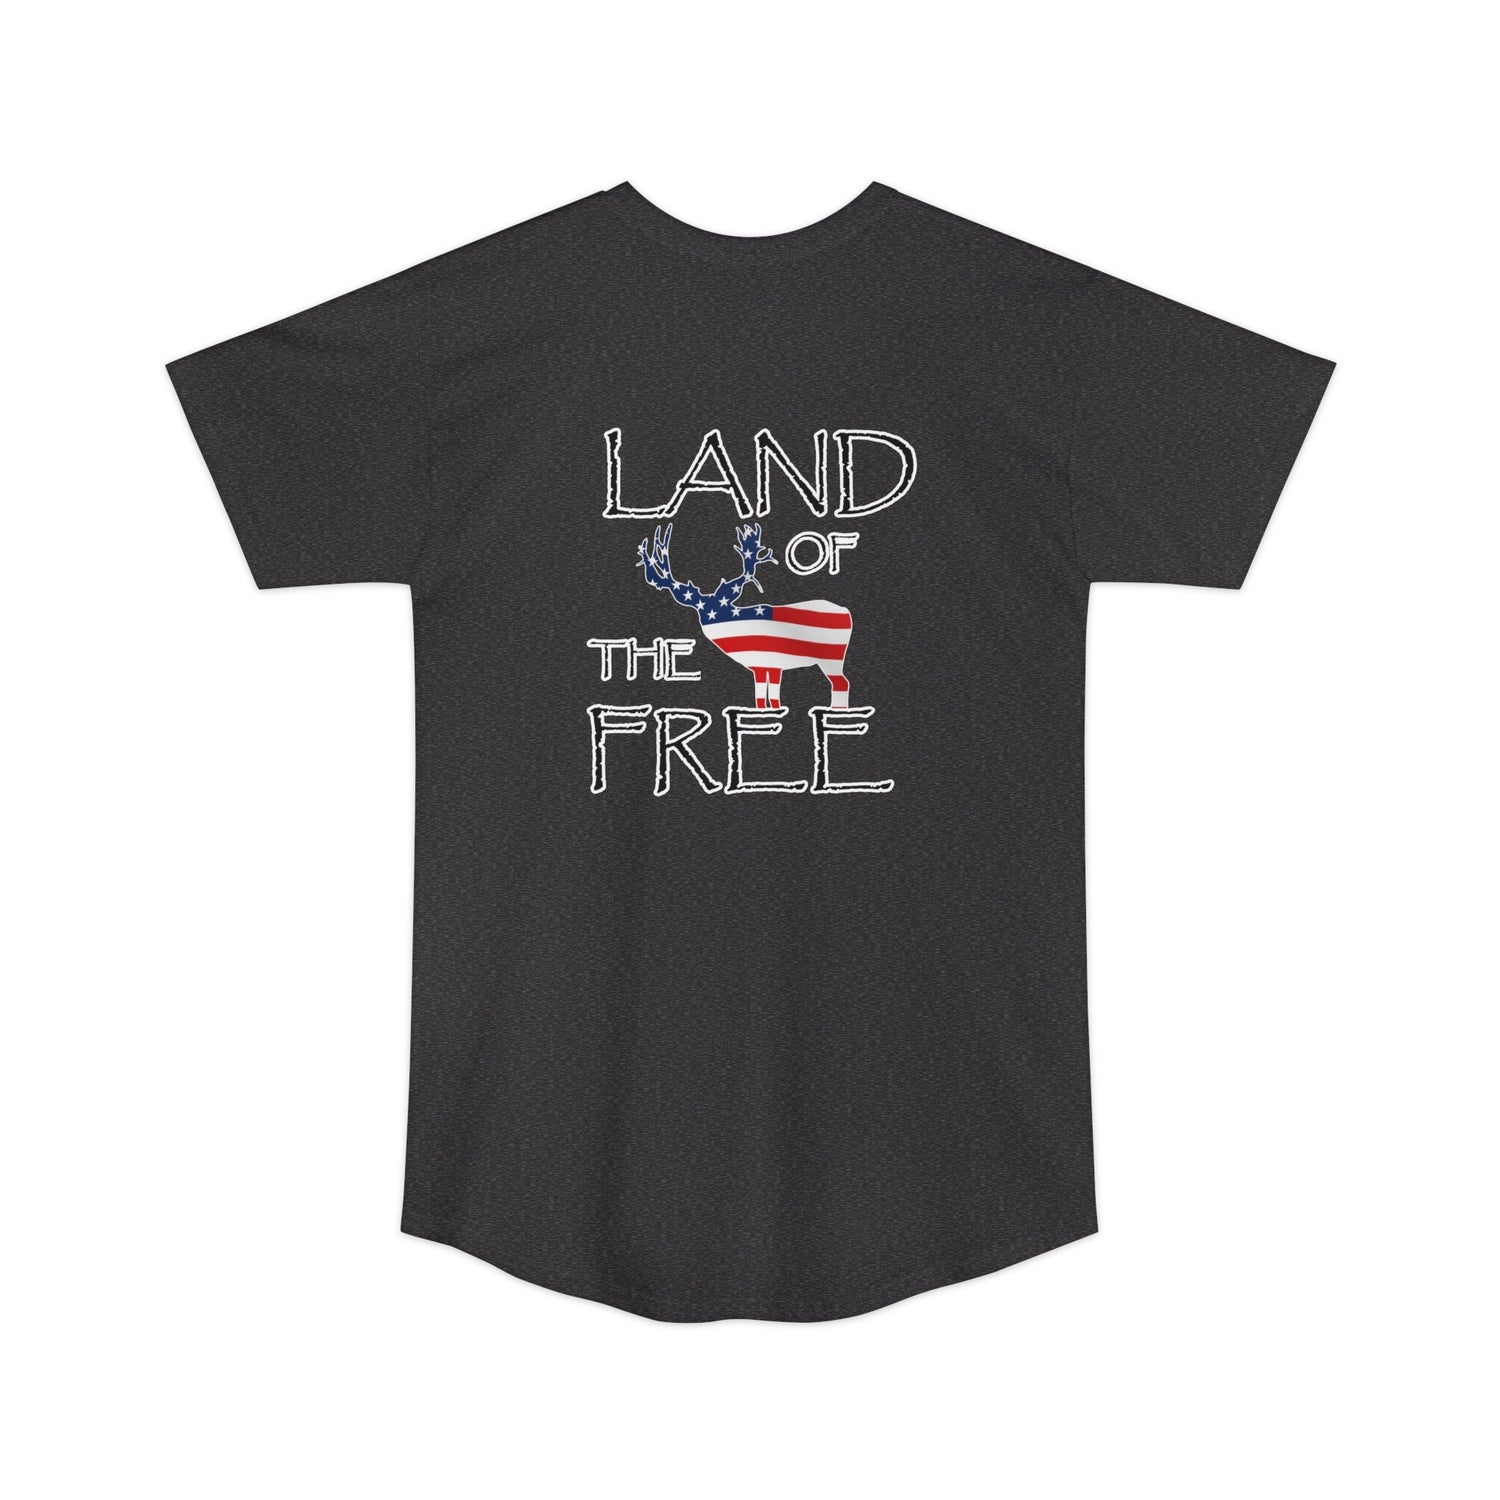 Athletic tall patriotic deer hunting t-shirt, color dark grey, back design placement